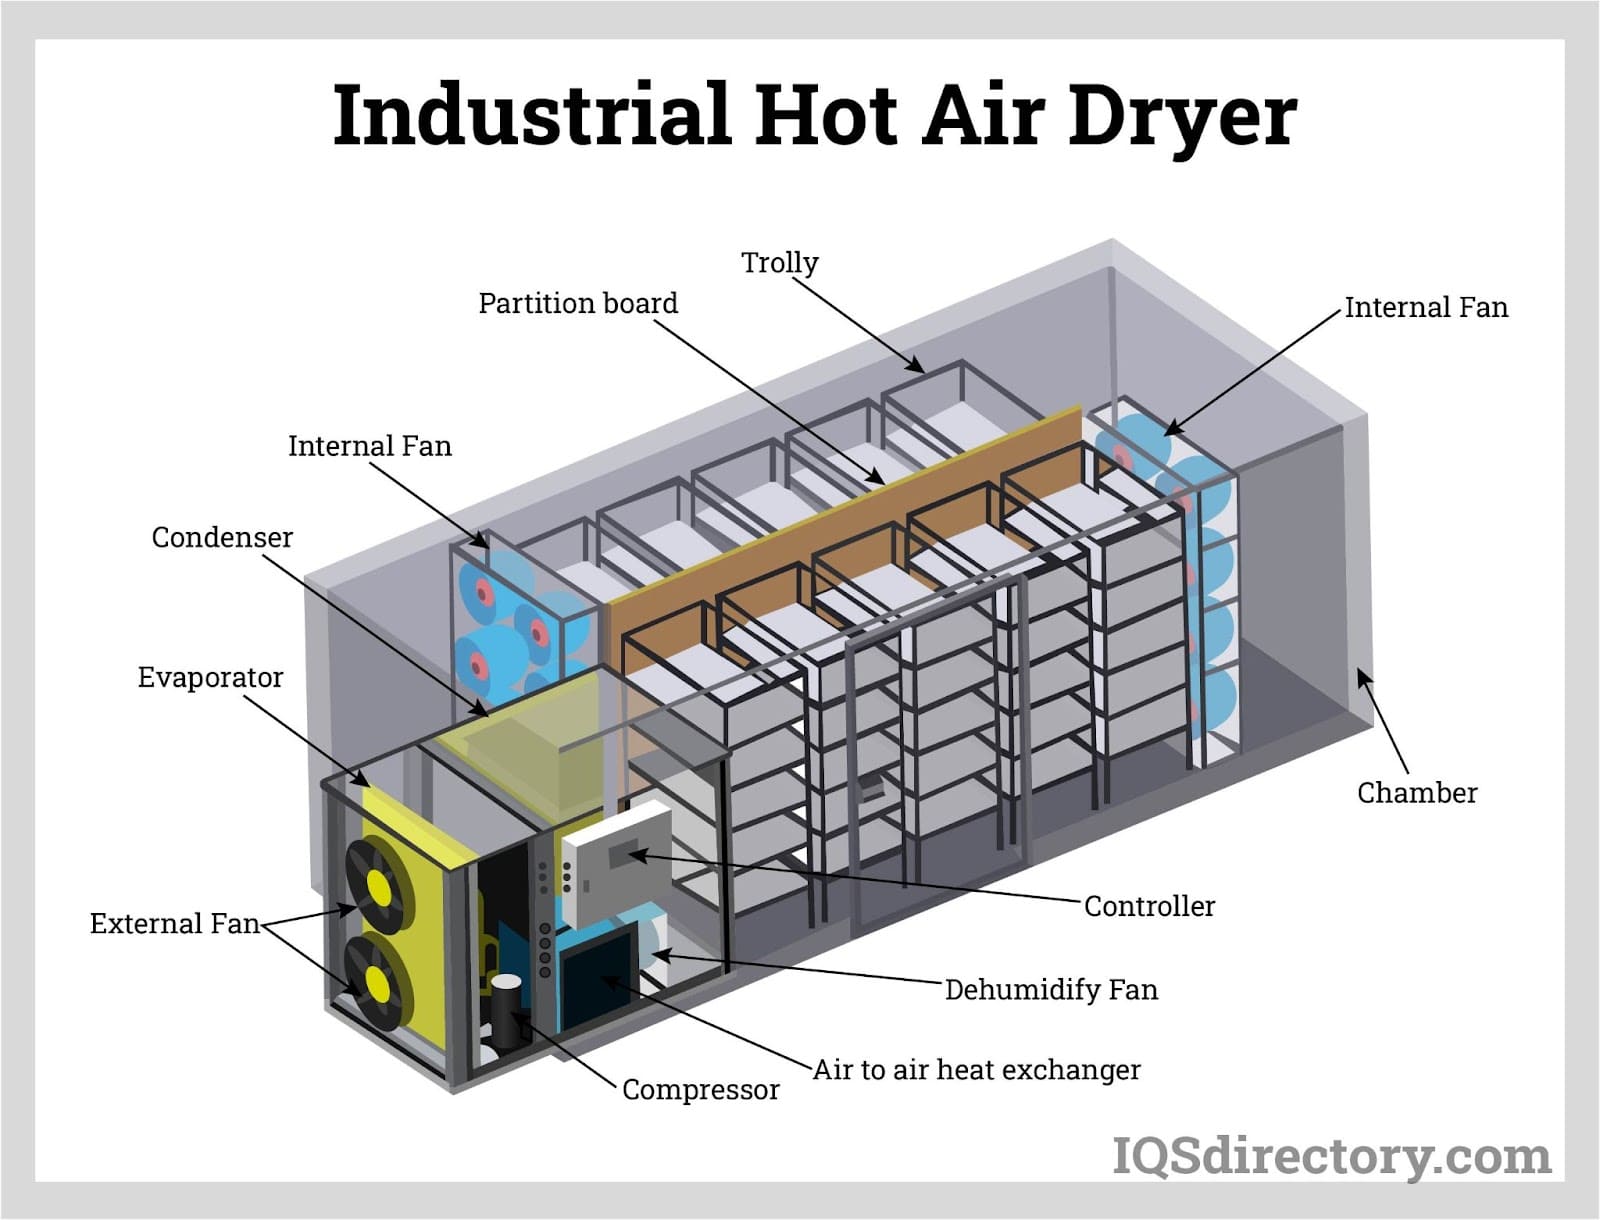 Industrial Hot Air Dryer